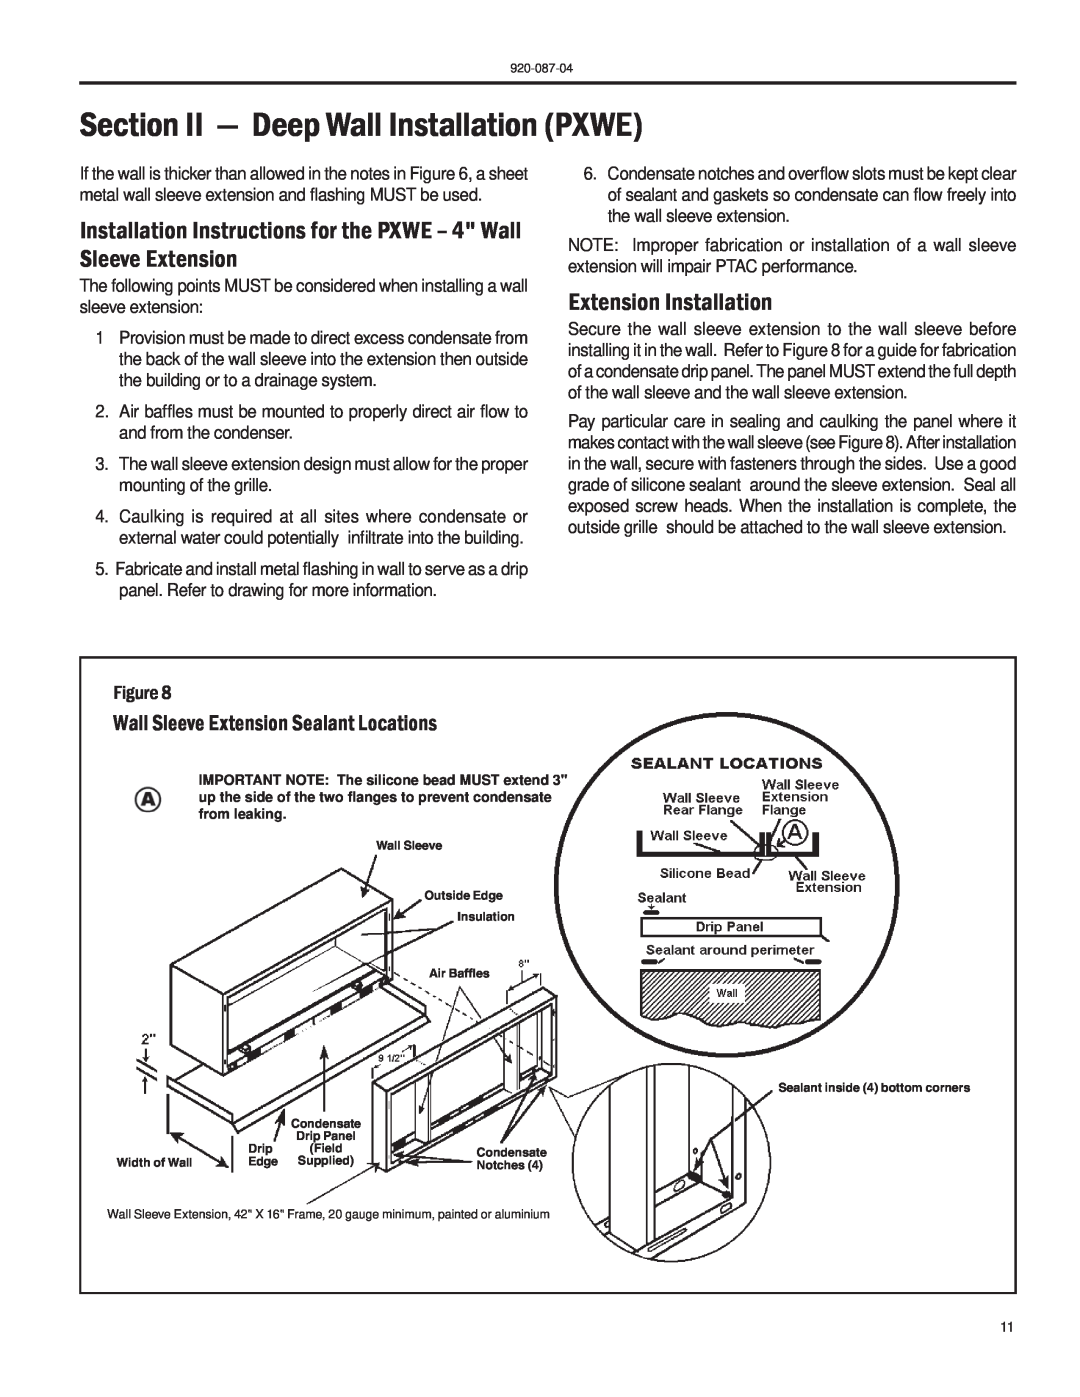 Friedrich HEAT PUMPS manual Section II - Deep Wall Installation PXWE, Extension Installation 